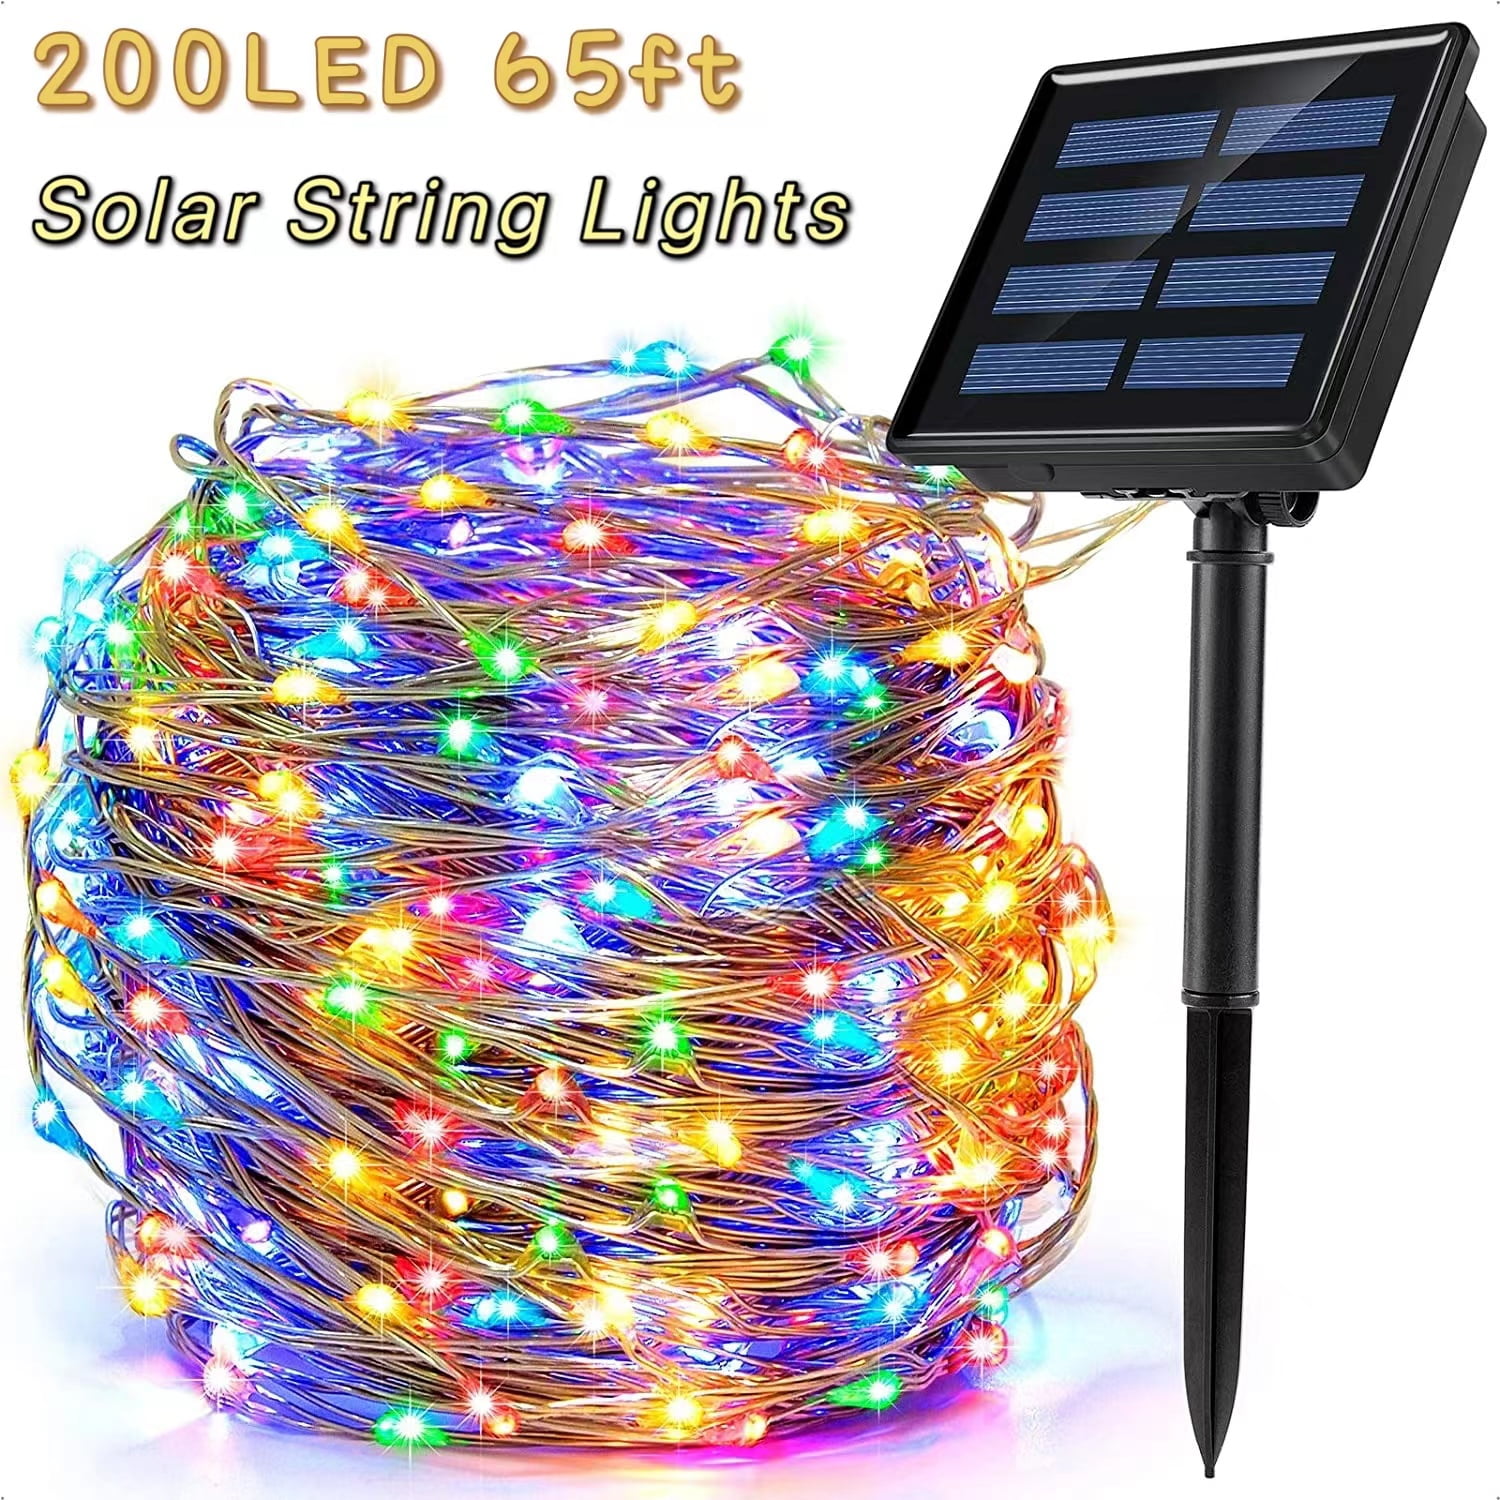 65FT 200LED Solar Fairy String Light Copper Wire Outdoor Waterproof Garden Decor